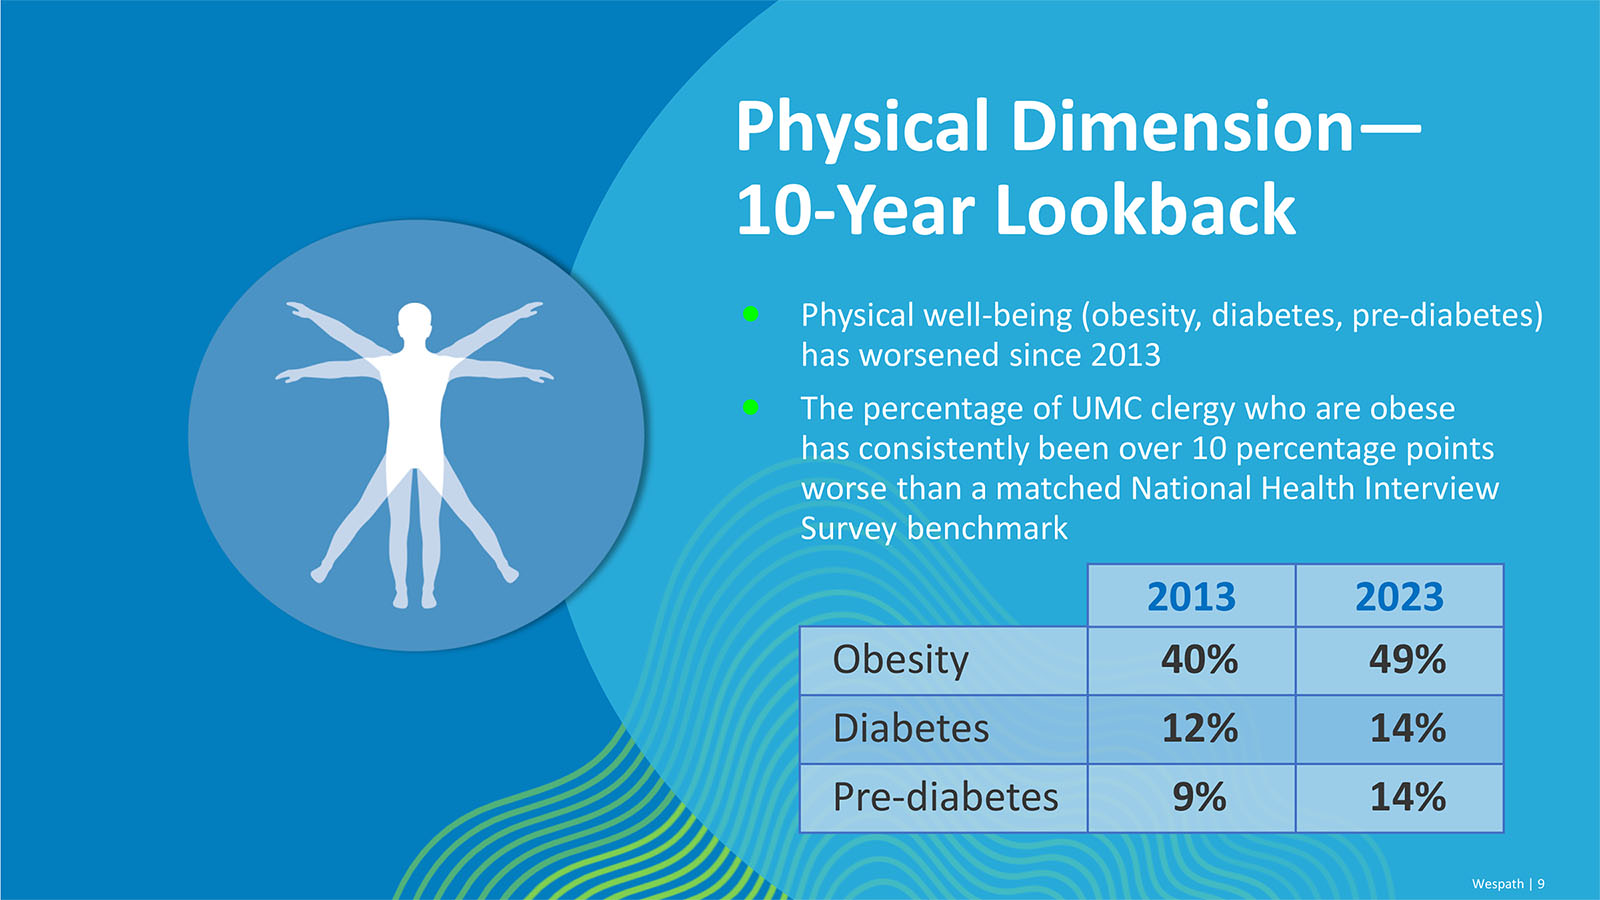 "Physical Dimension— 10-Year Lookback" Courtesy image